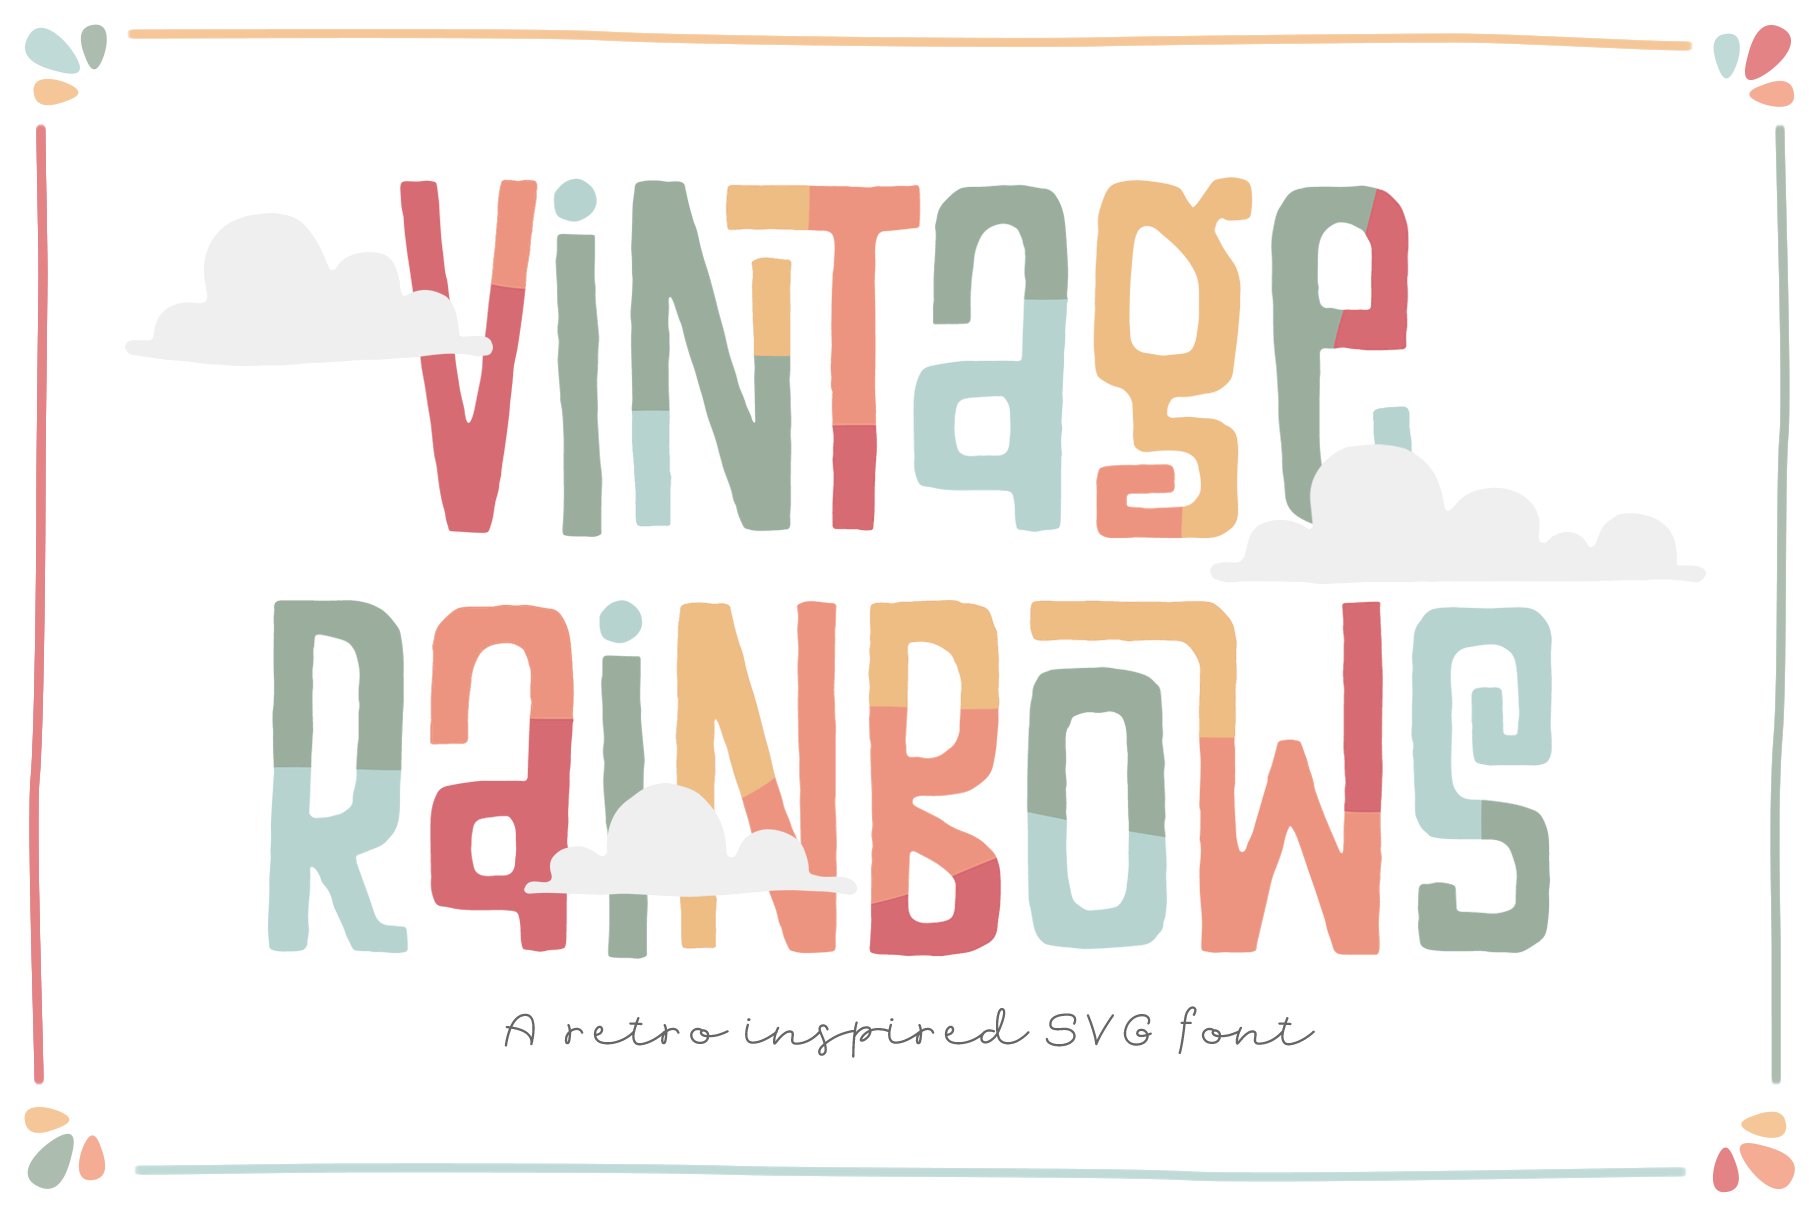 Vintage Rainbows Font cover image.